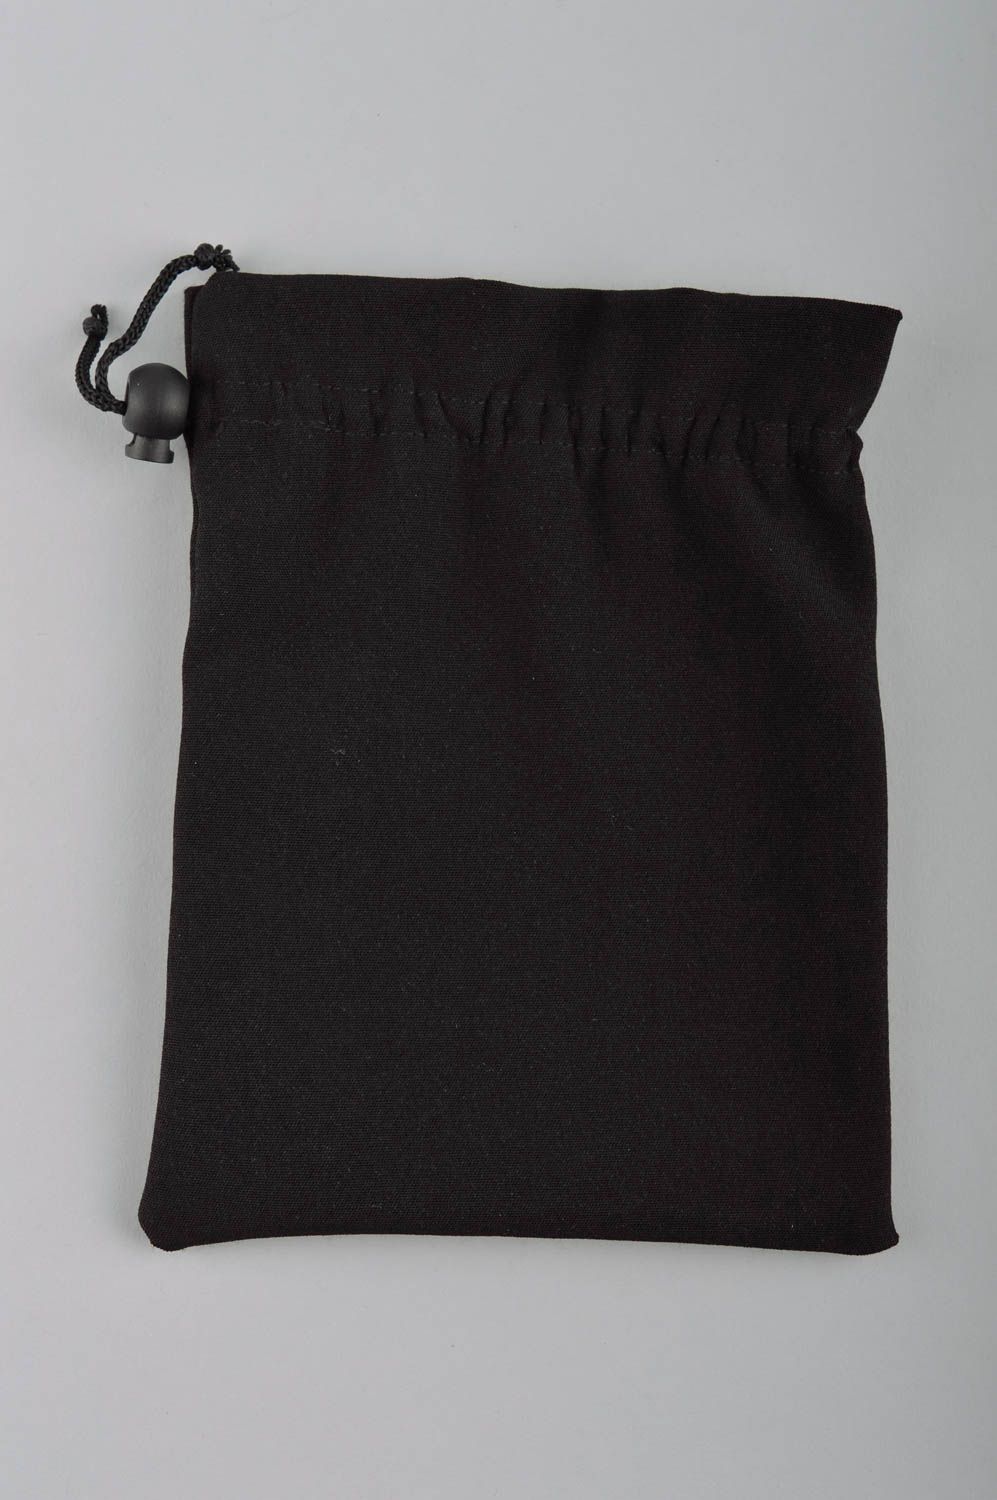 Unusual handmade fabric purse black fabric pouch amazing designs small gifts photo 3